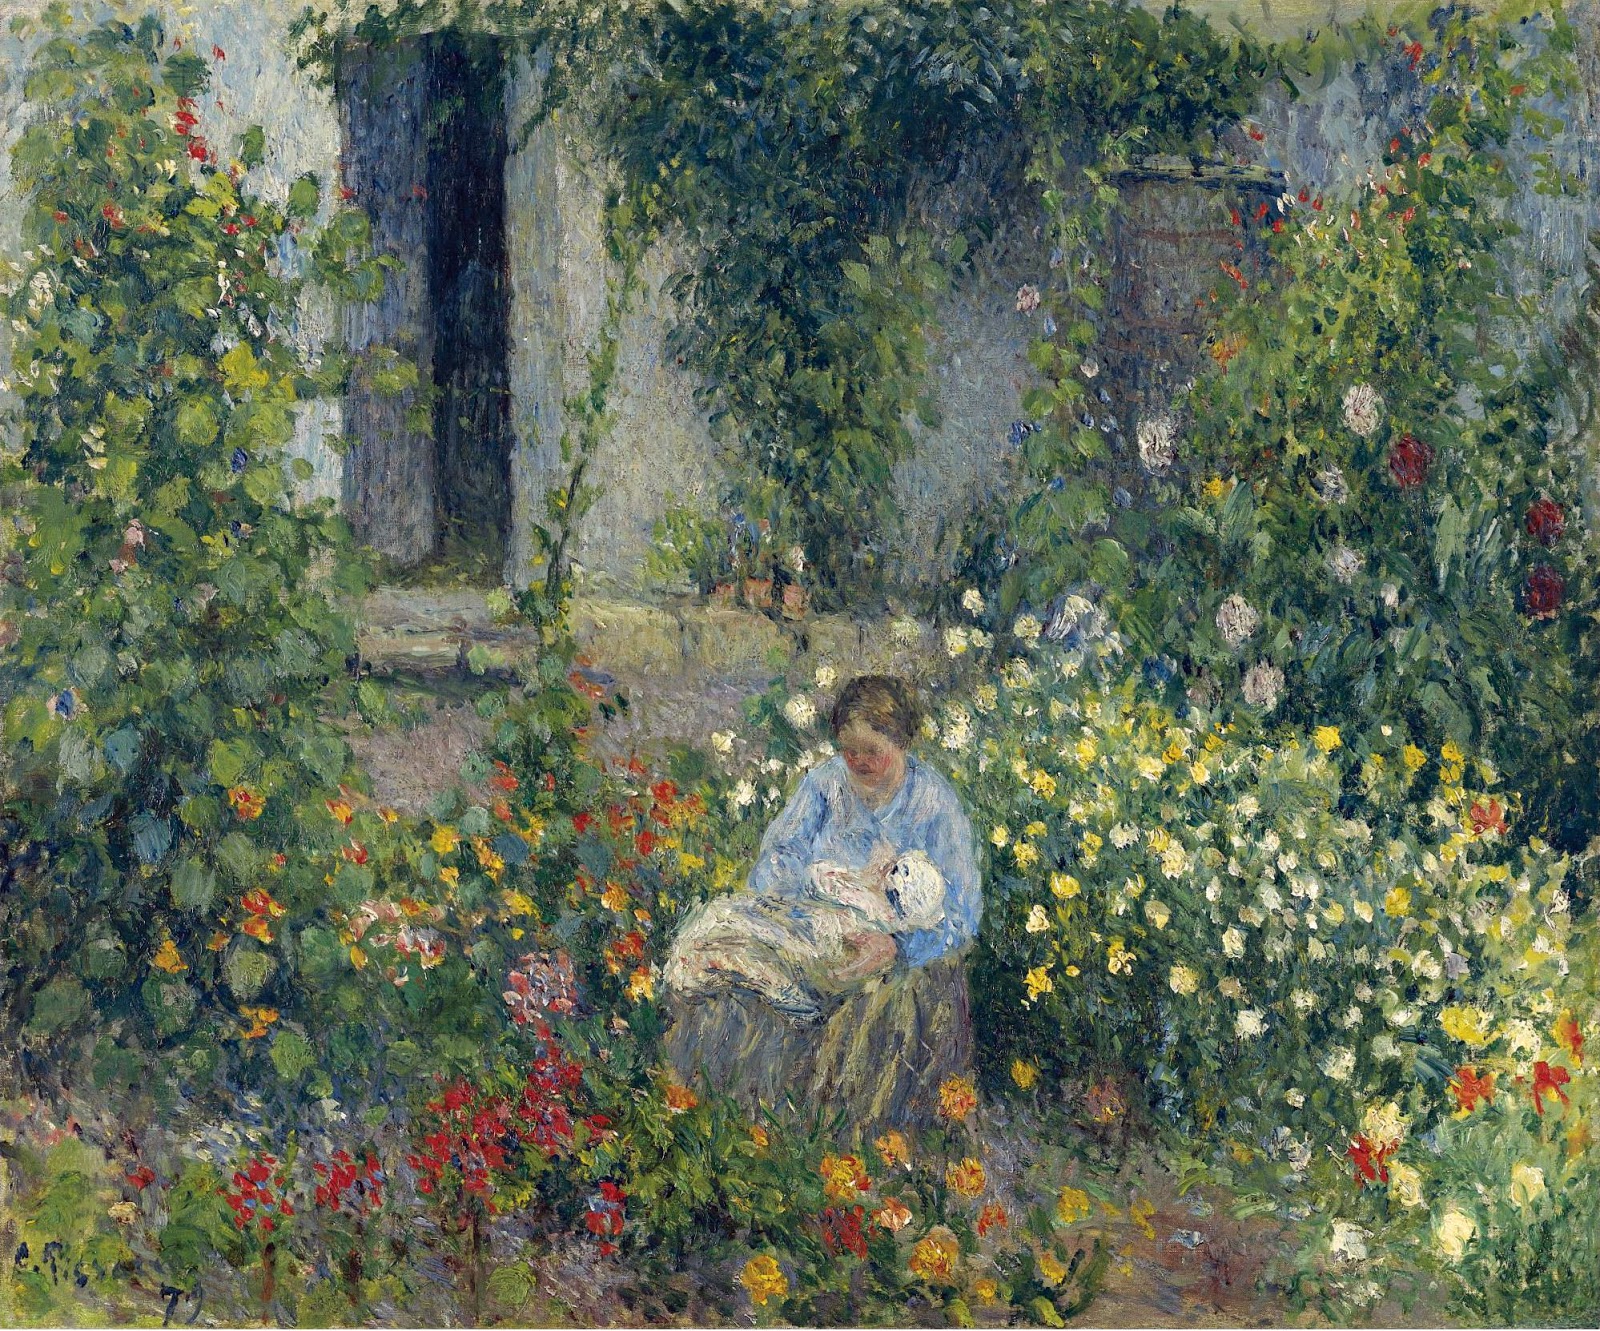 Camille+Pissarro-1830-1903 (379).jpg